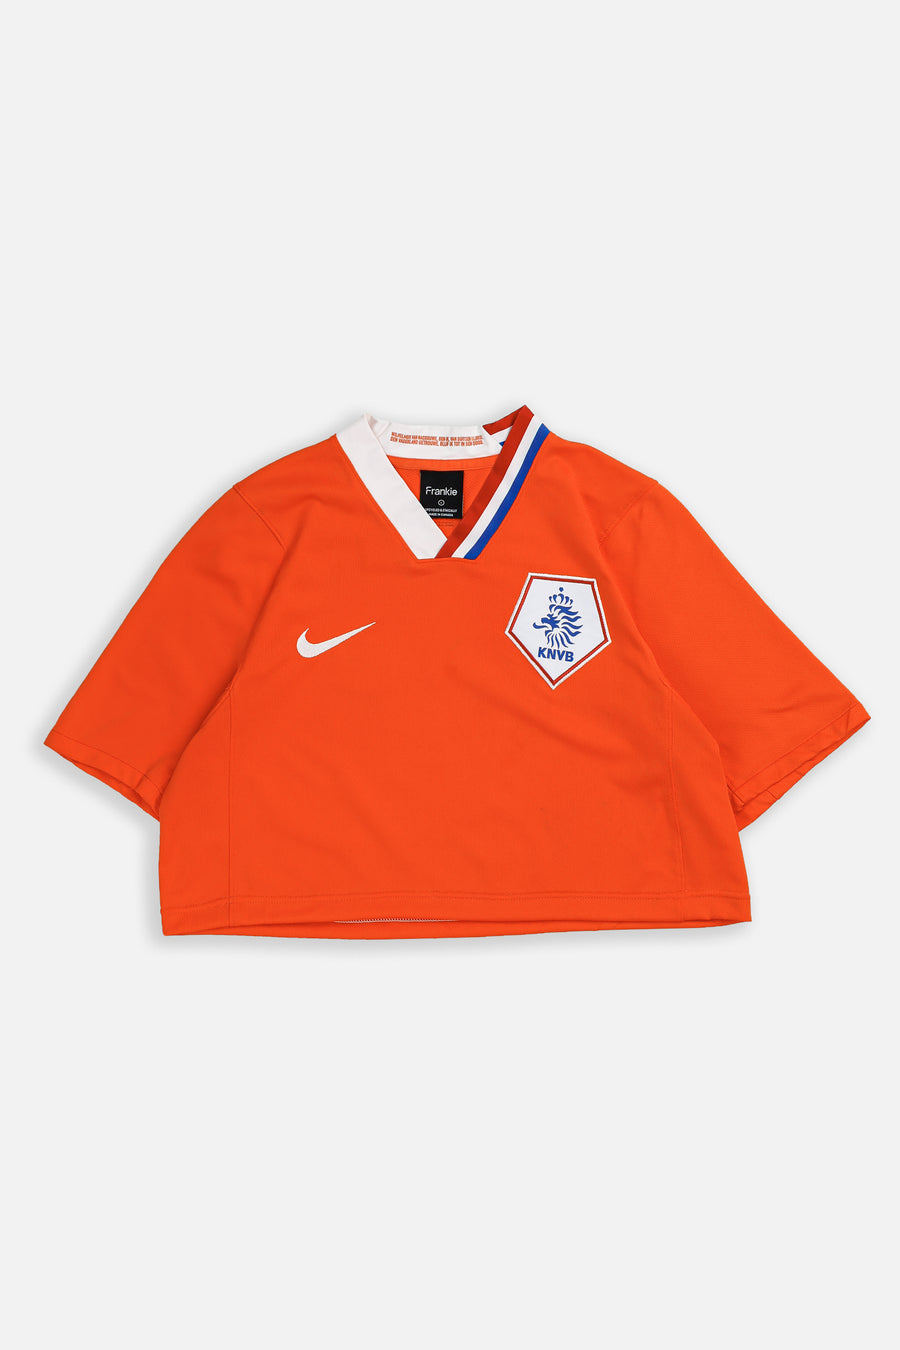 Rework Crop Netherlands Soccer Jersey - L